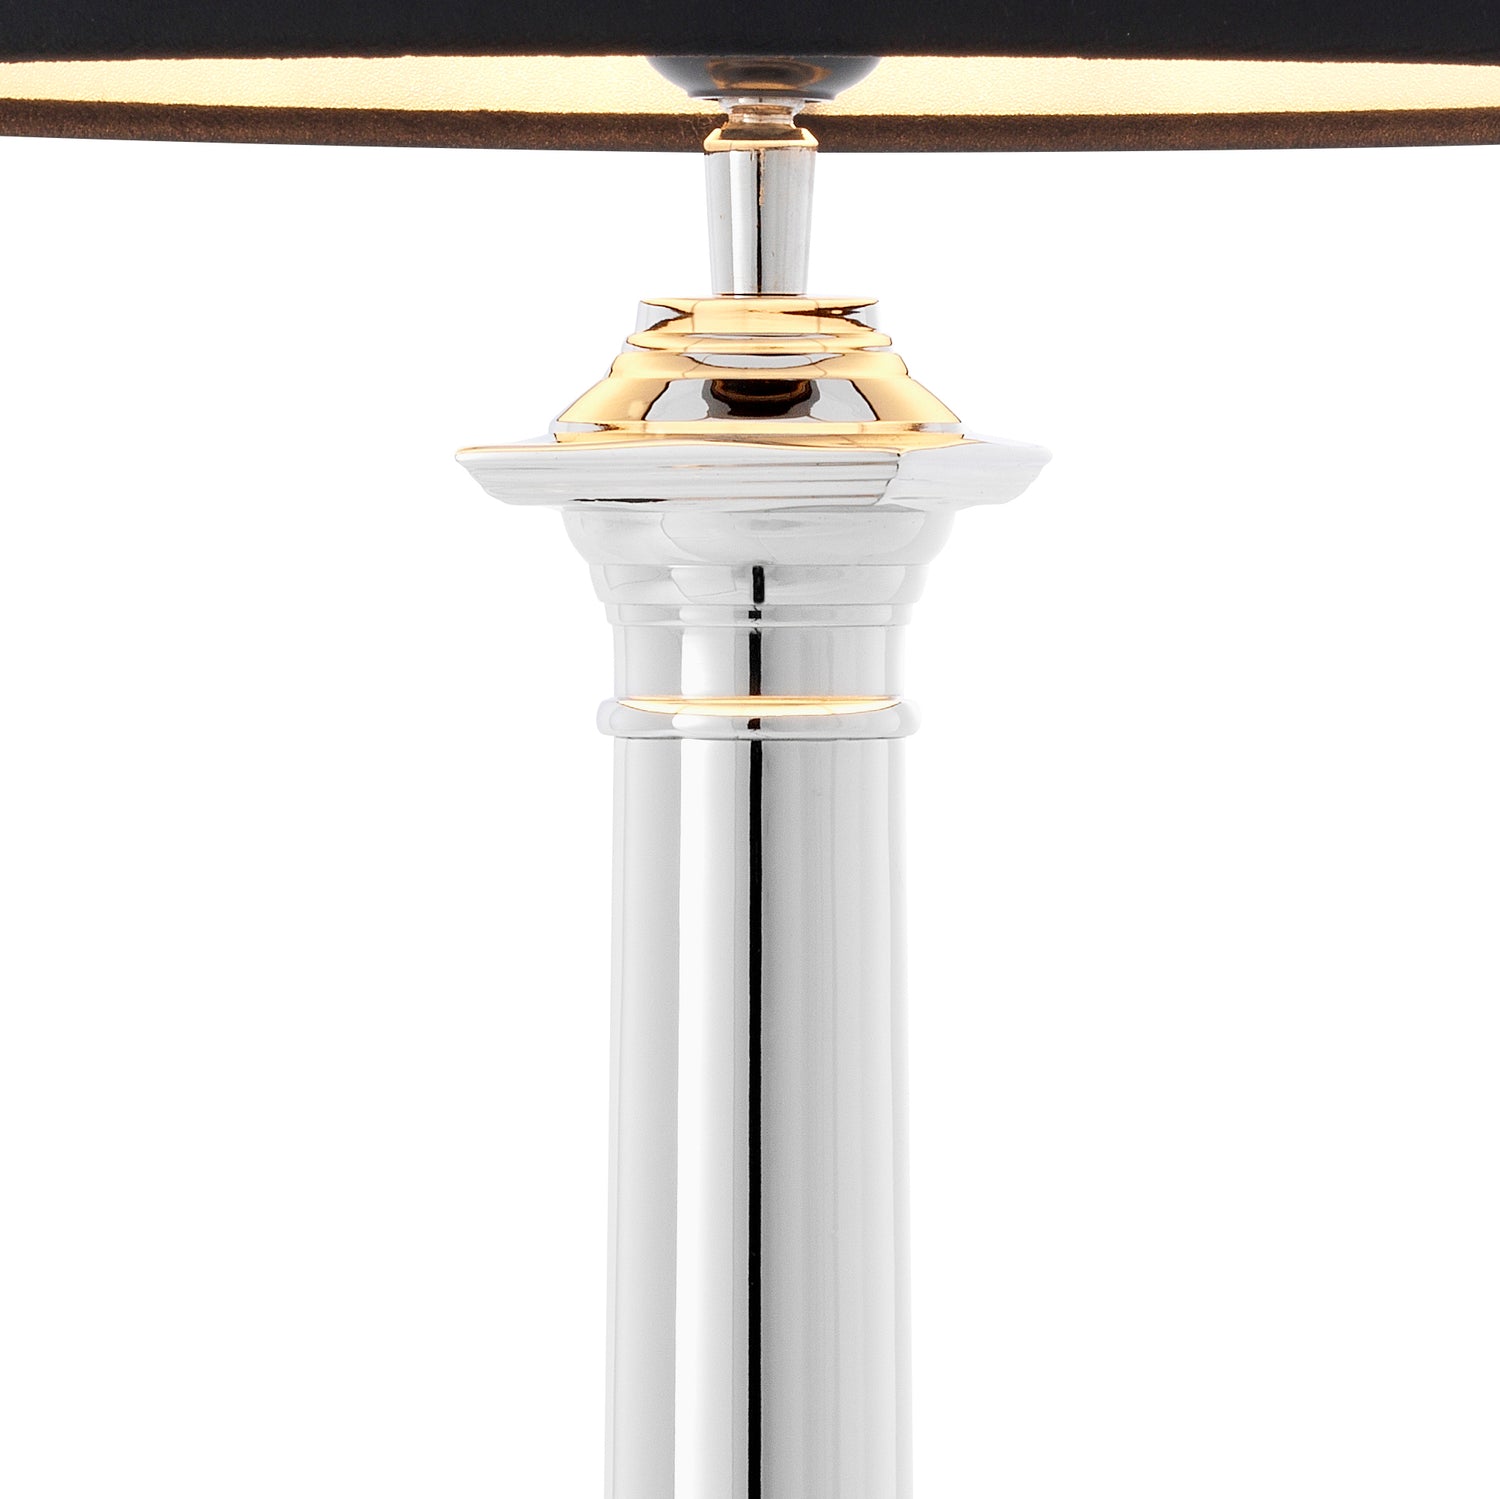 Table Lamp Cologne L